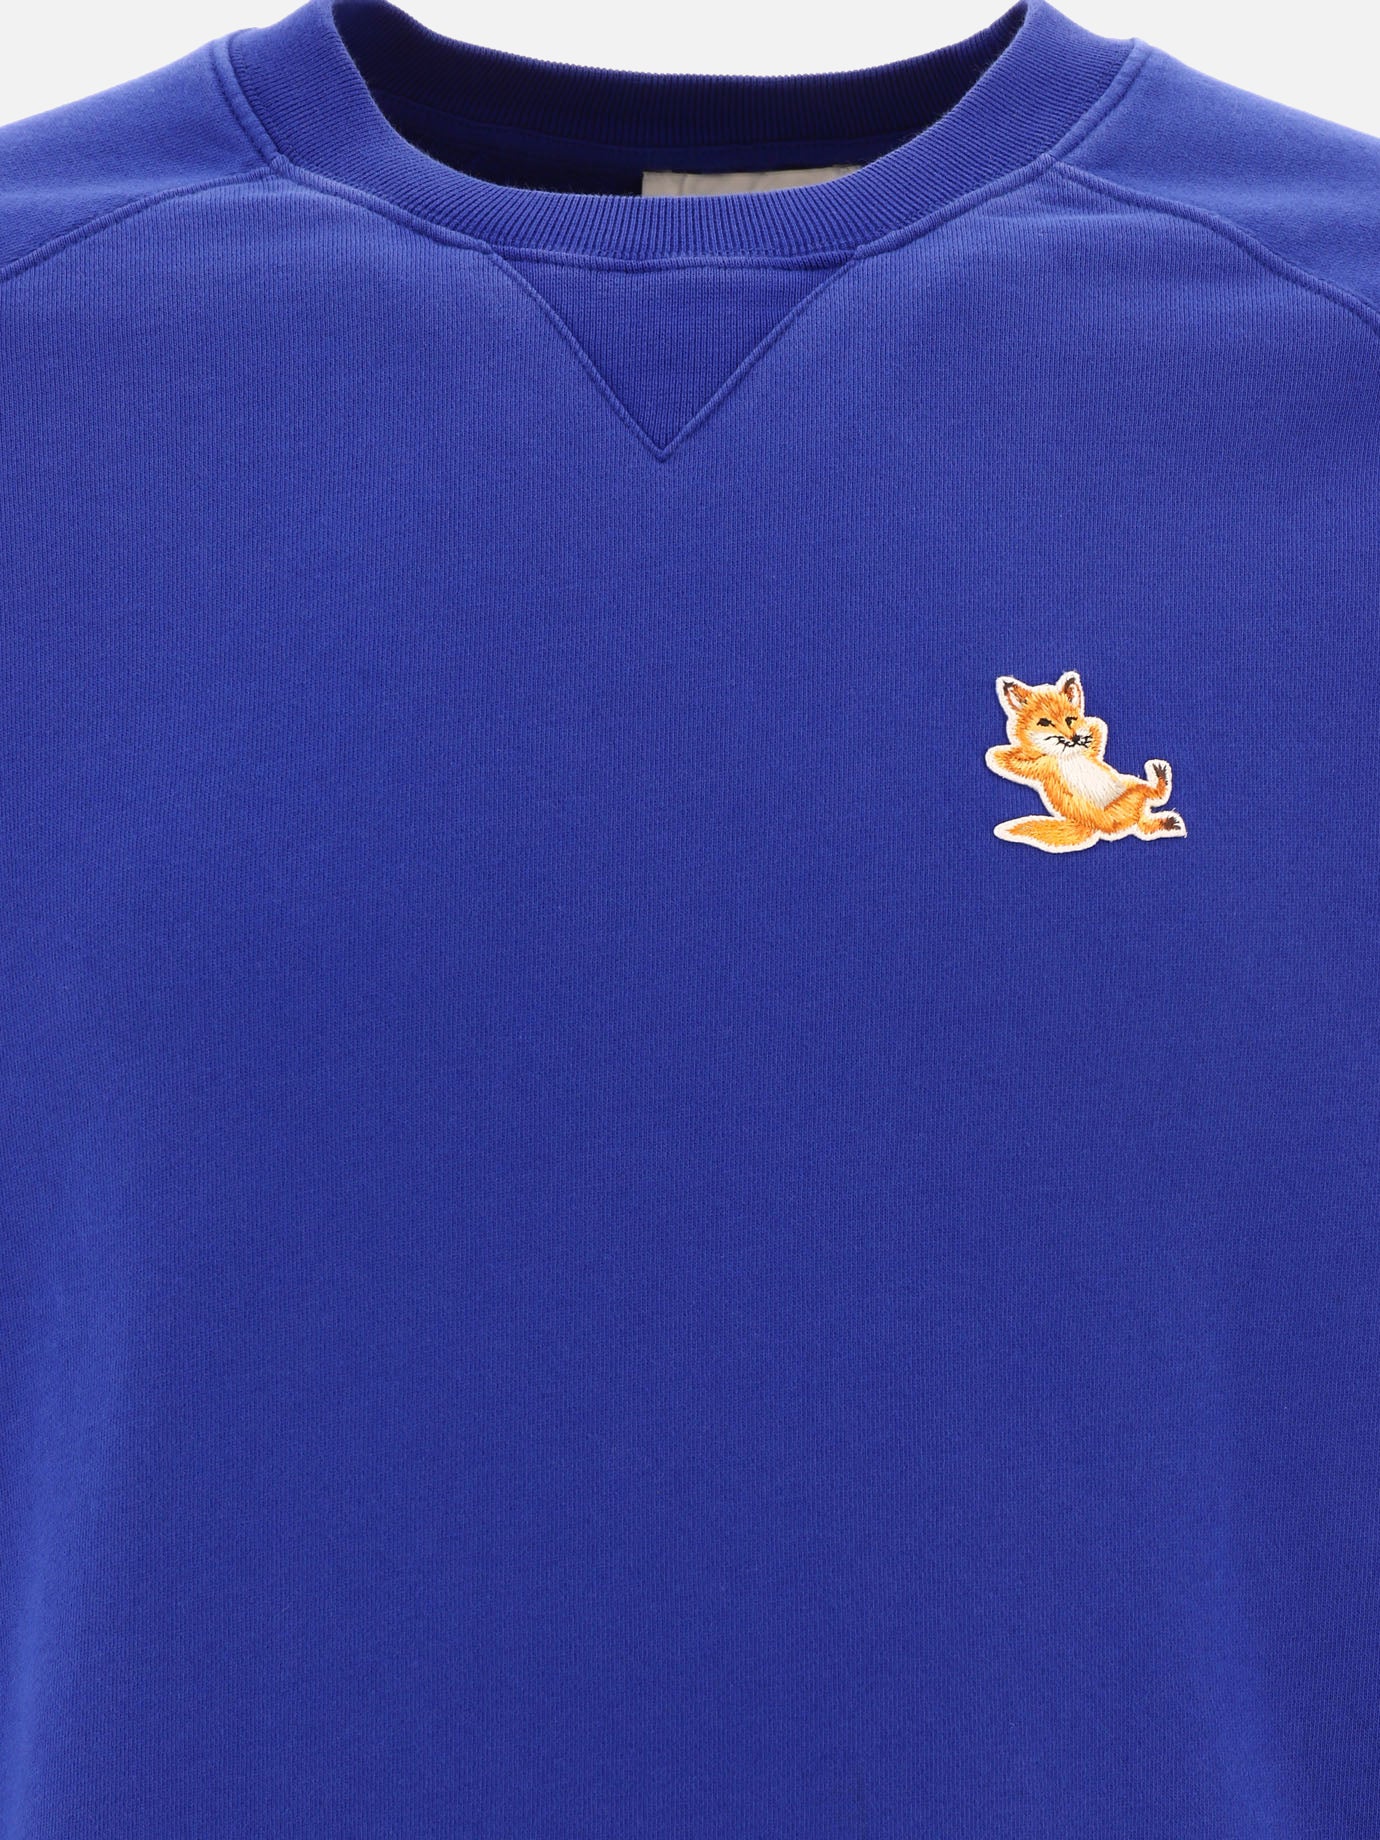 "Chillax Fox" sweatshirt